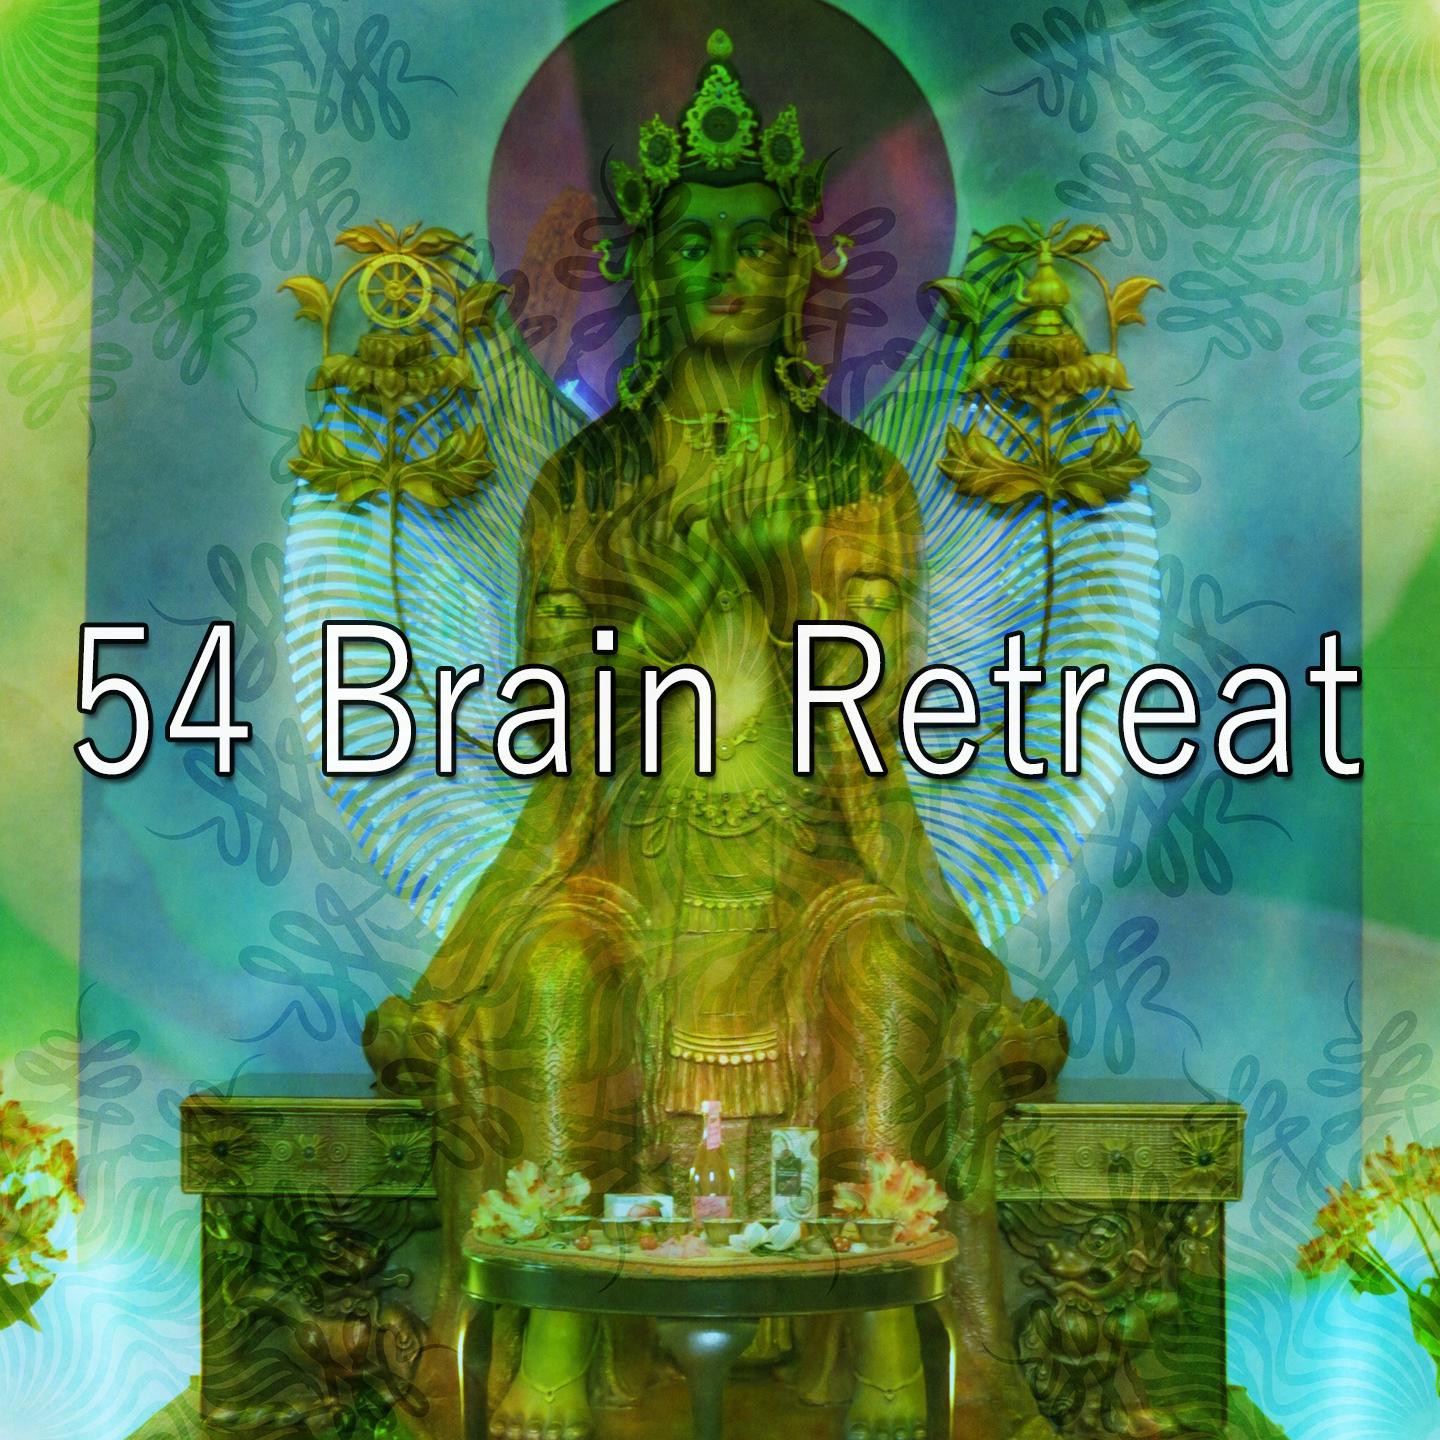 54 Brain Retreat